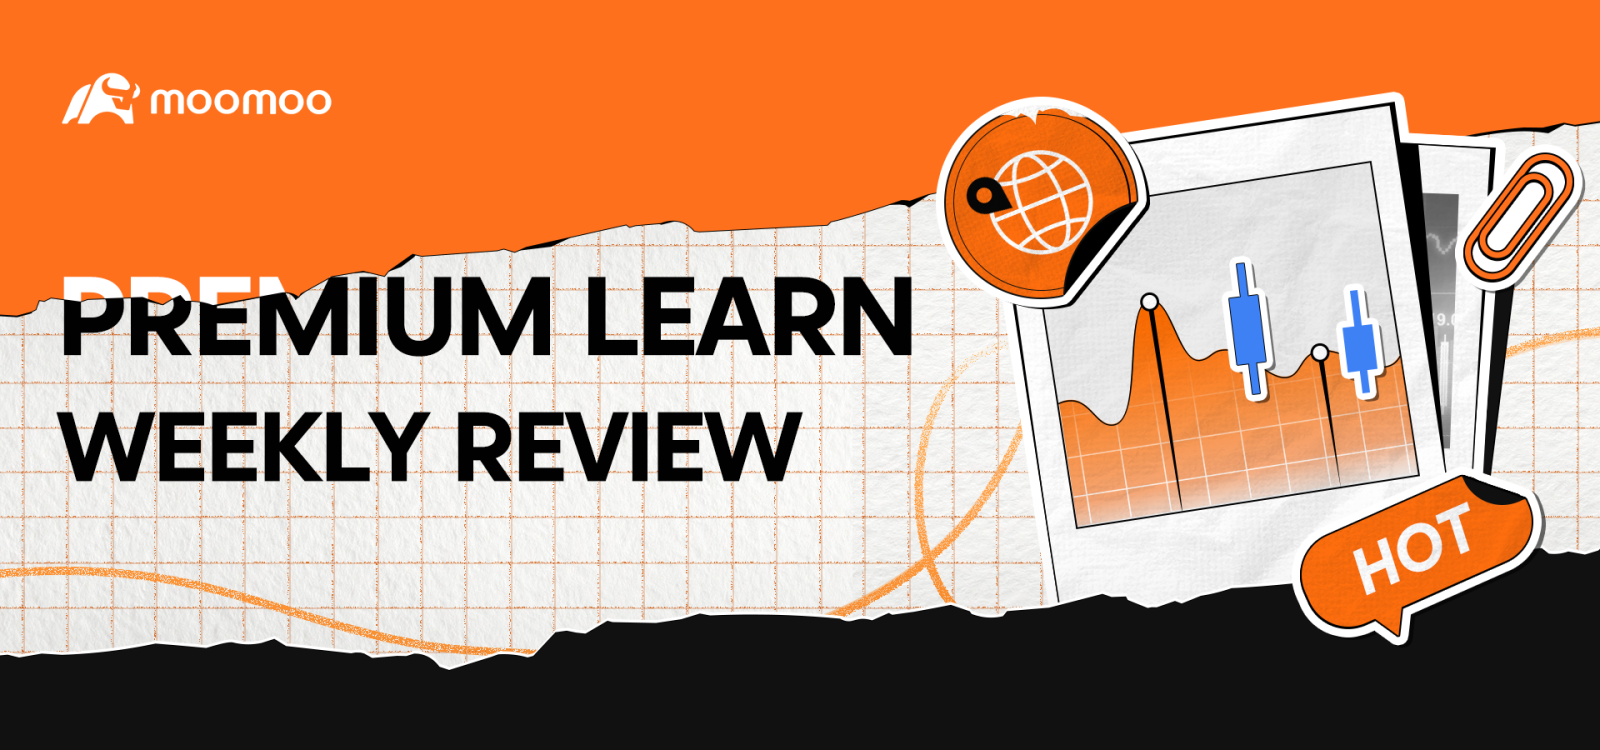 Premium Learn 周评 6 月 12 日至